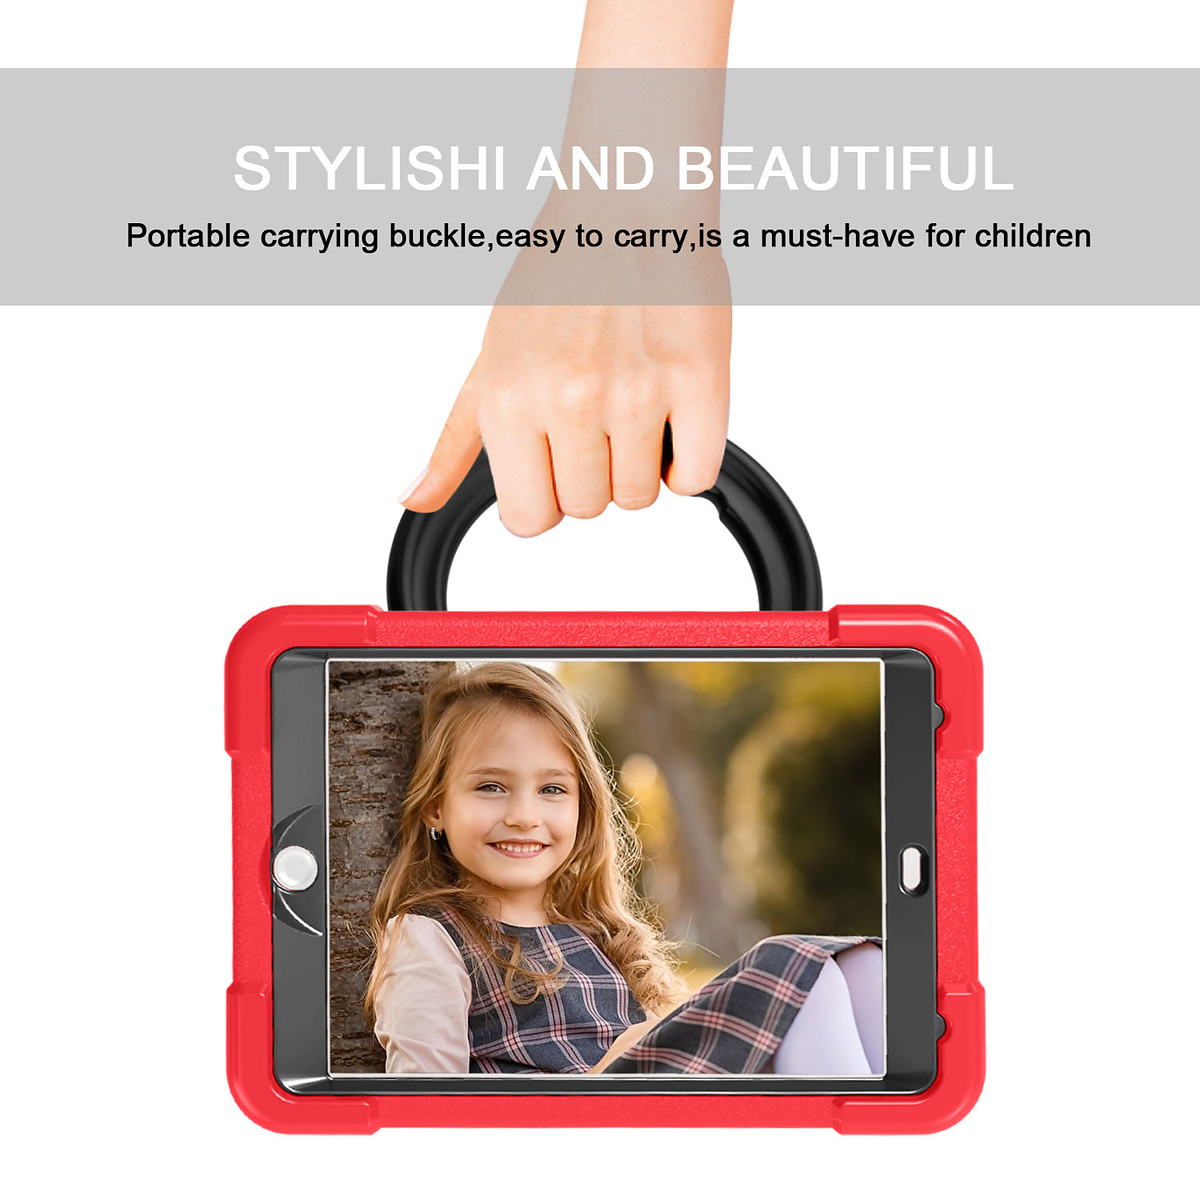 Barnfodral med roterbart ställ, iPad Mini 1/2/3, röd/svart